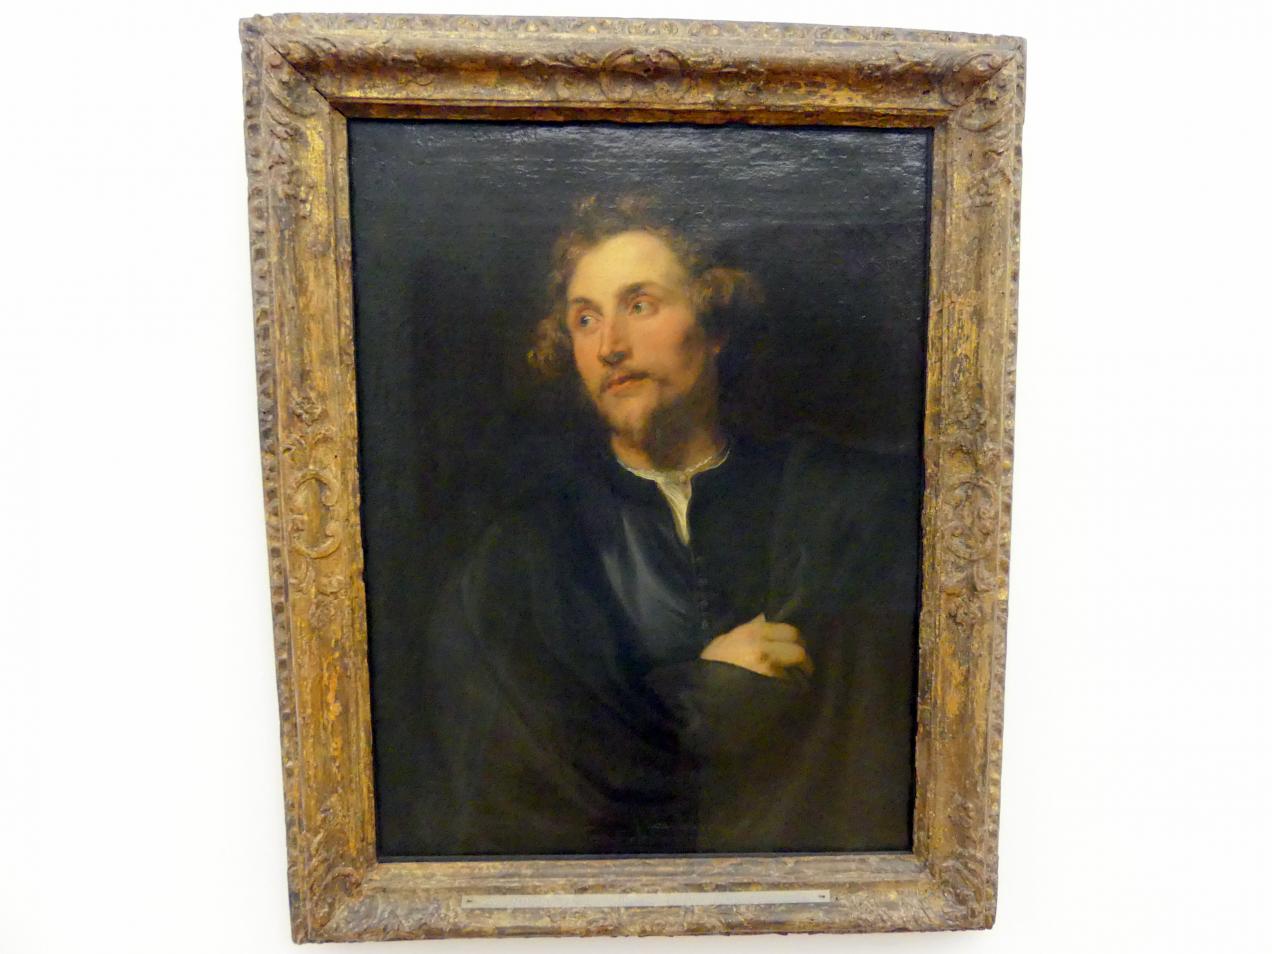 Anthonis (Anton) van Dyck (1614–1641), Bildnis des Bildhauers Georg Petel, München, Alte Pinakothek, Obergeschoss Kabinett 8,9, 1627–1628